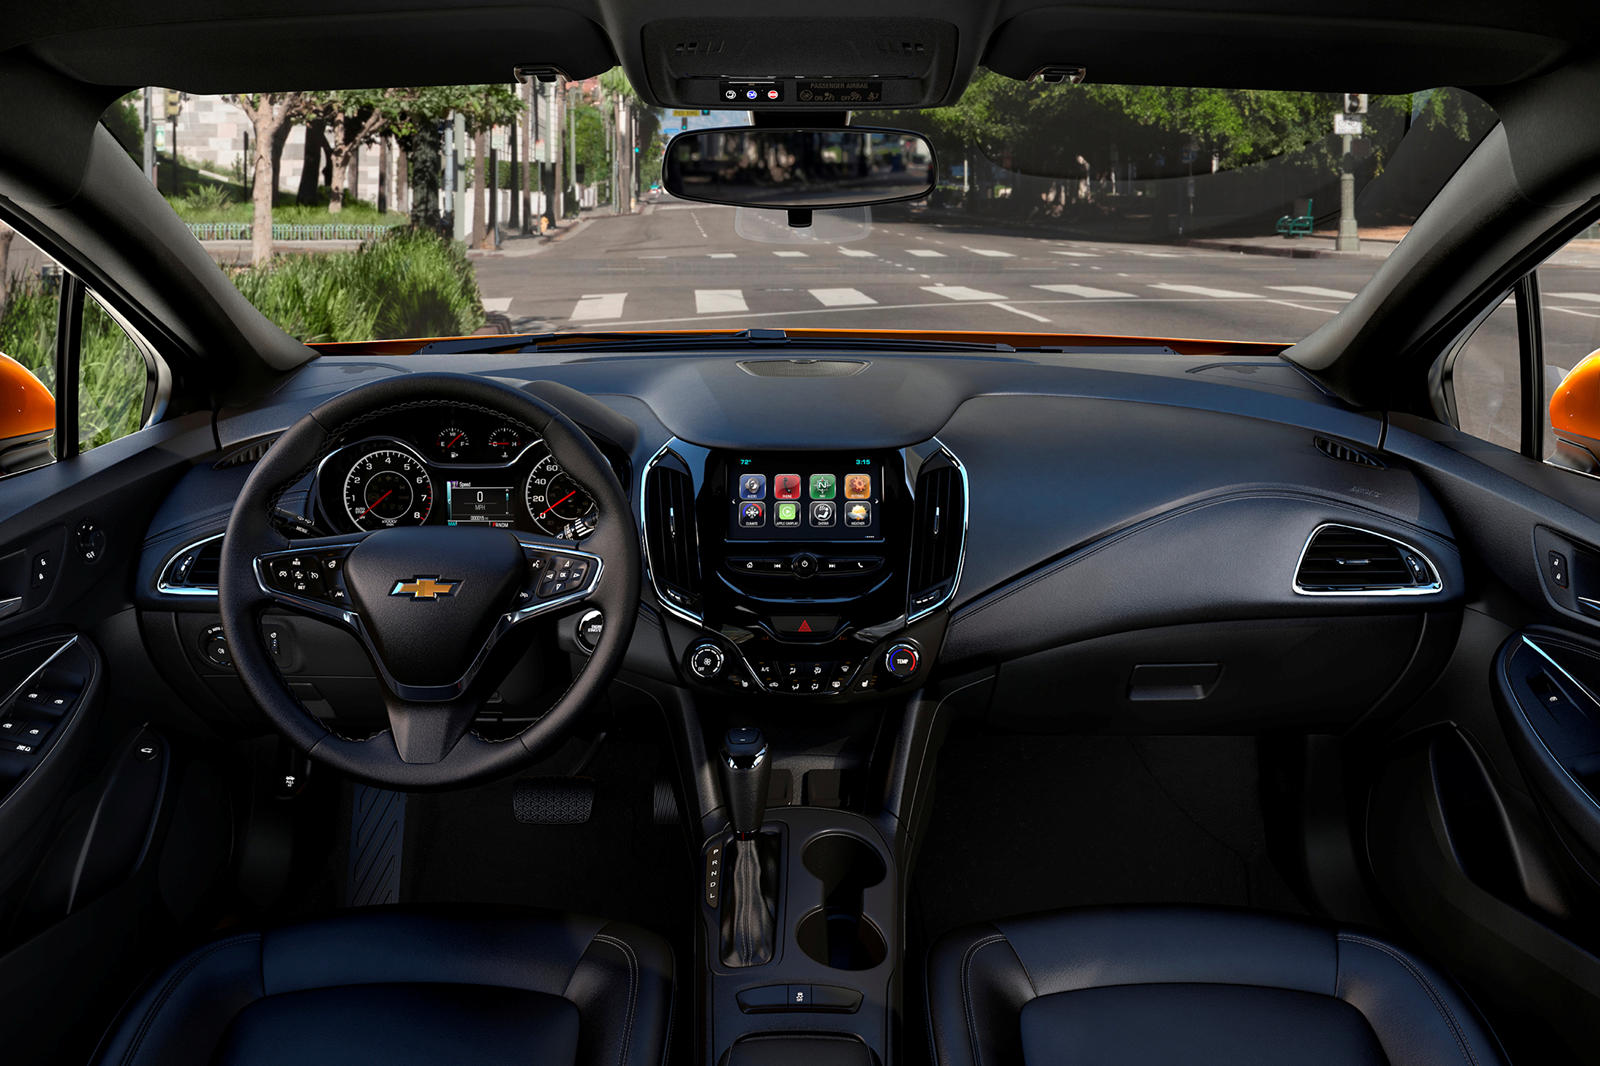 2019 Chevrolet Cruze Sedan Review, Trims, Specs, Price, New Interior